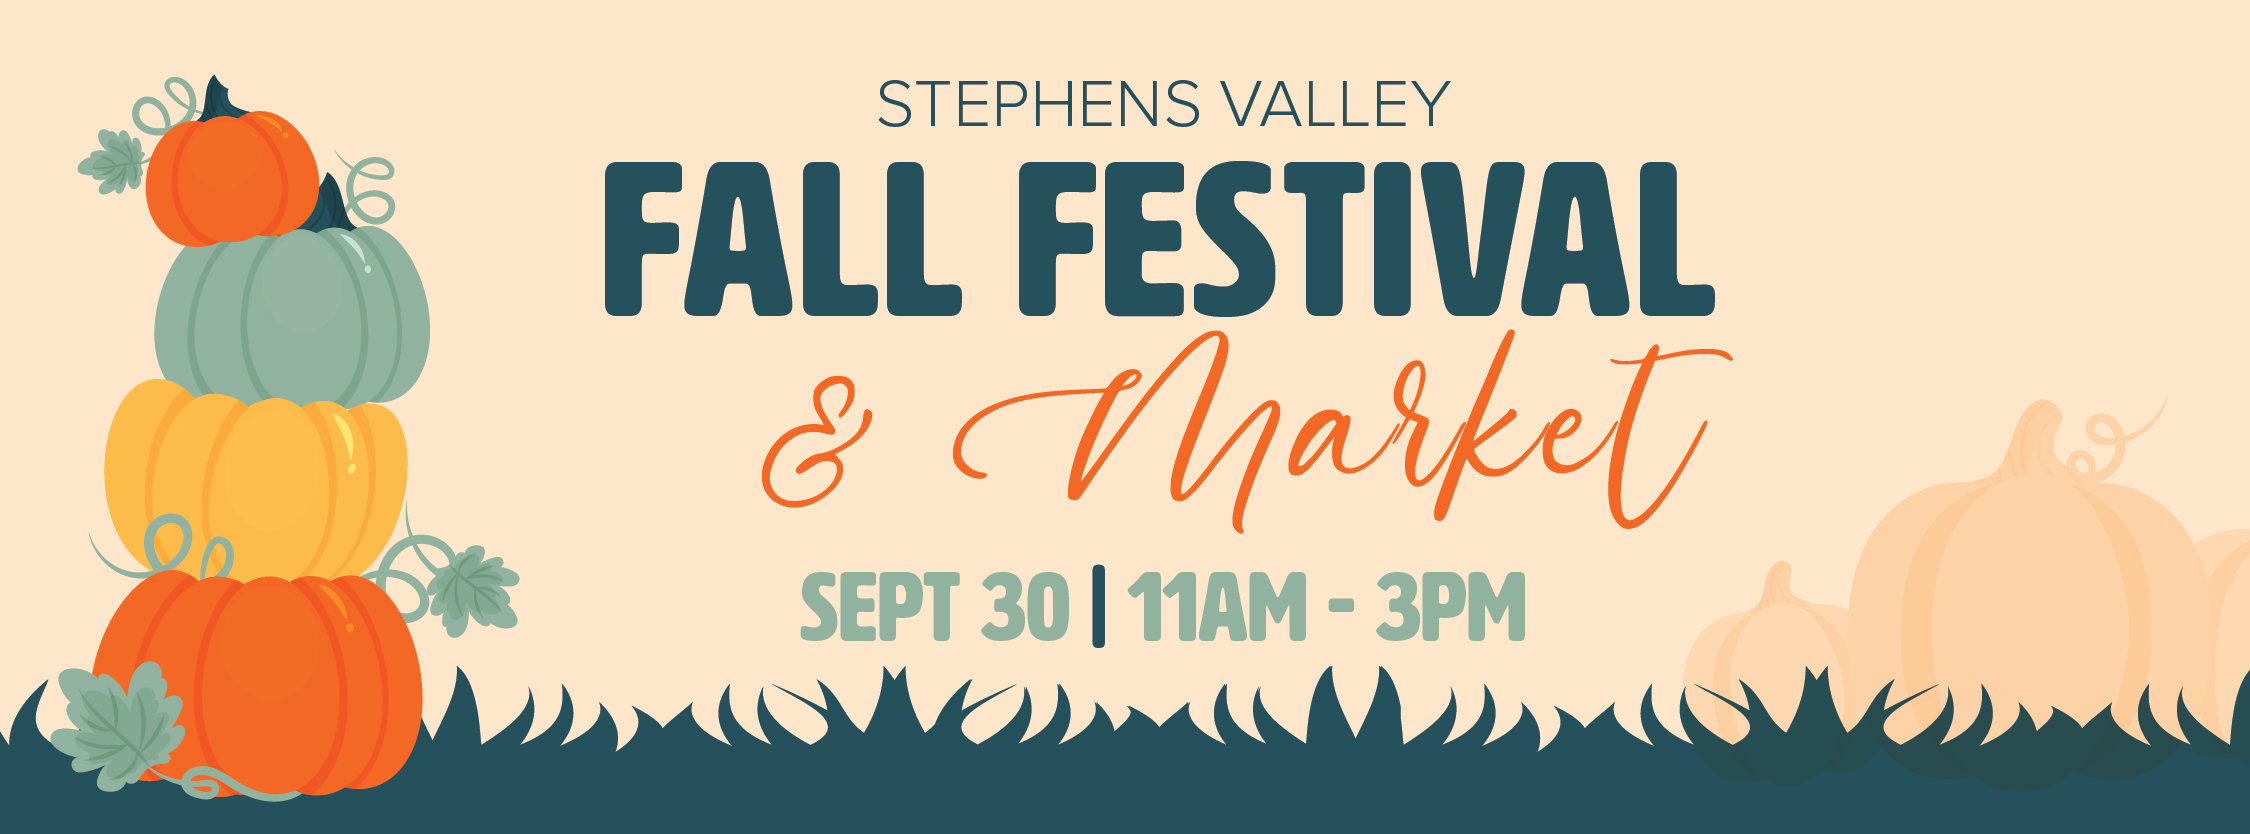 Stephens Valley Fall Festival